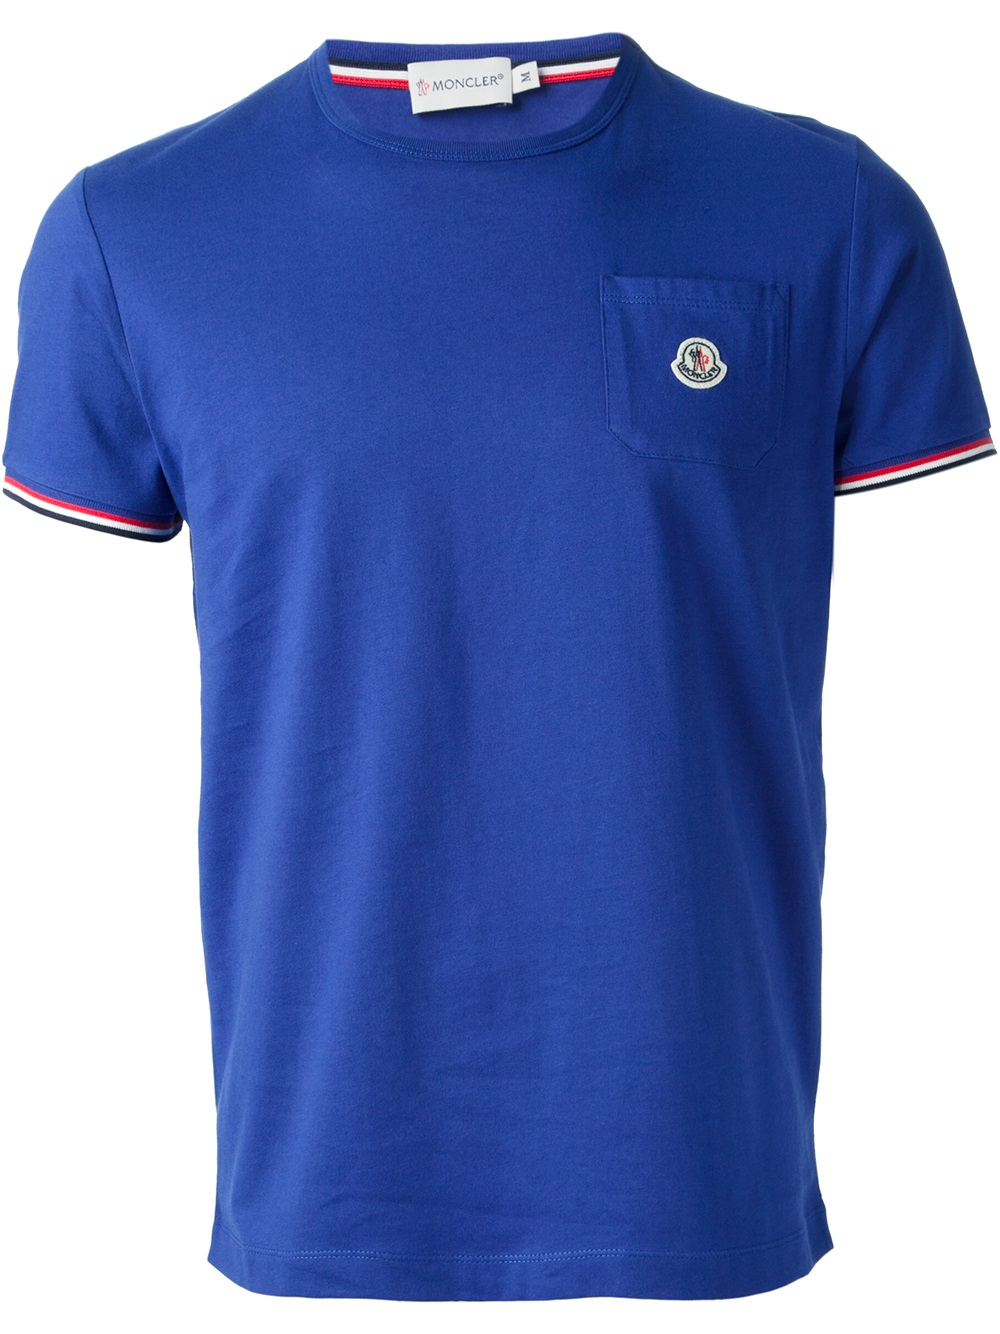 Lyst - Moncler Logo Tshirt in Purple for Men